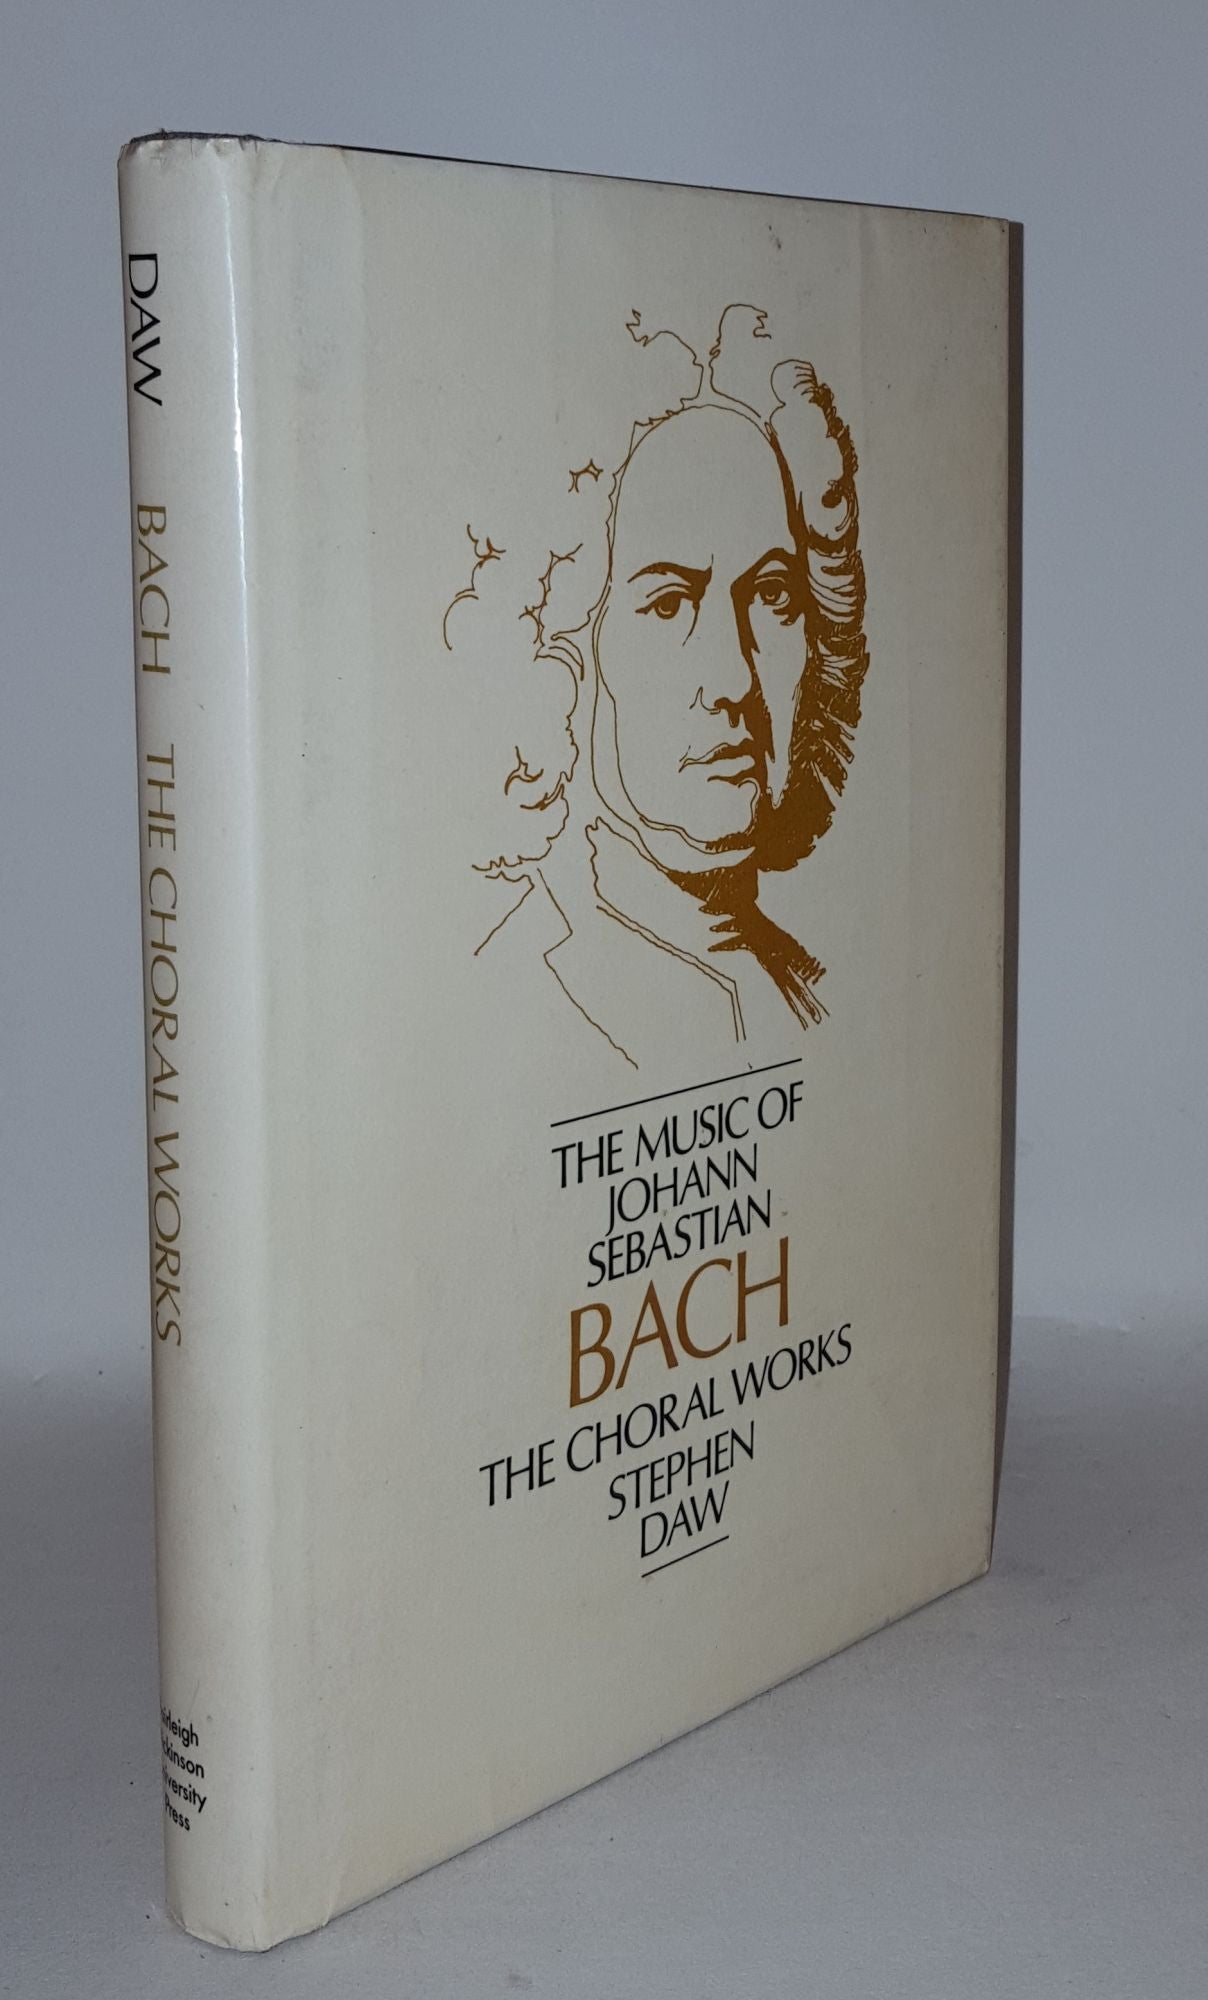 DAW Stephen - The Music of Johann Sebastian Bach the Choral Works